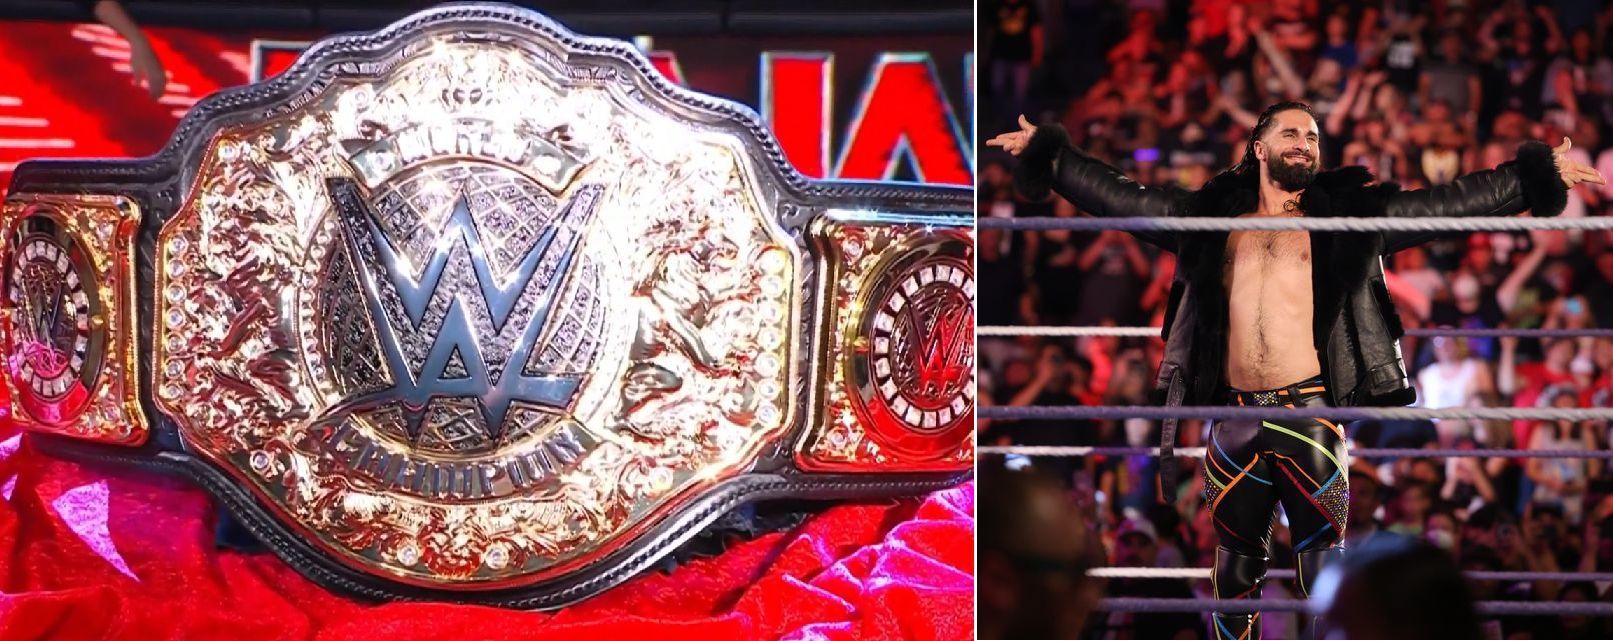 Will Seth Rollins be the next WWE World Heavyweight Champion